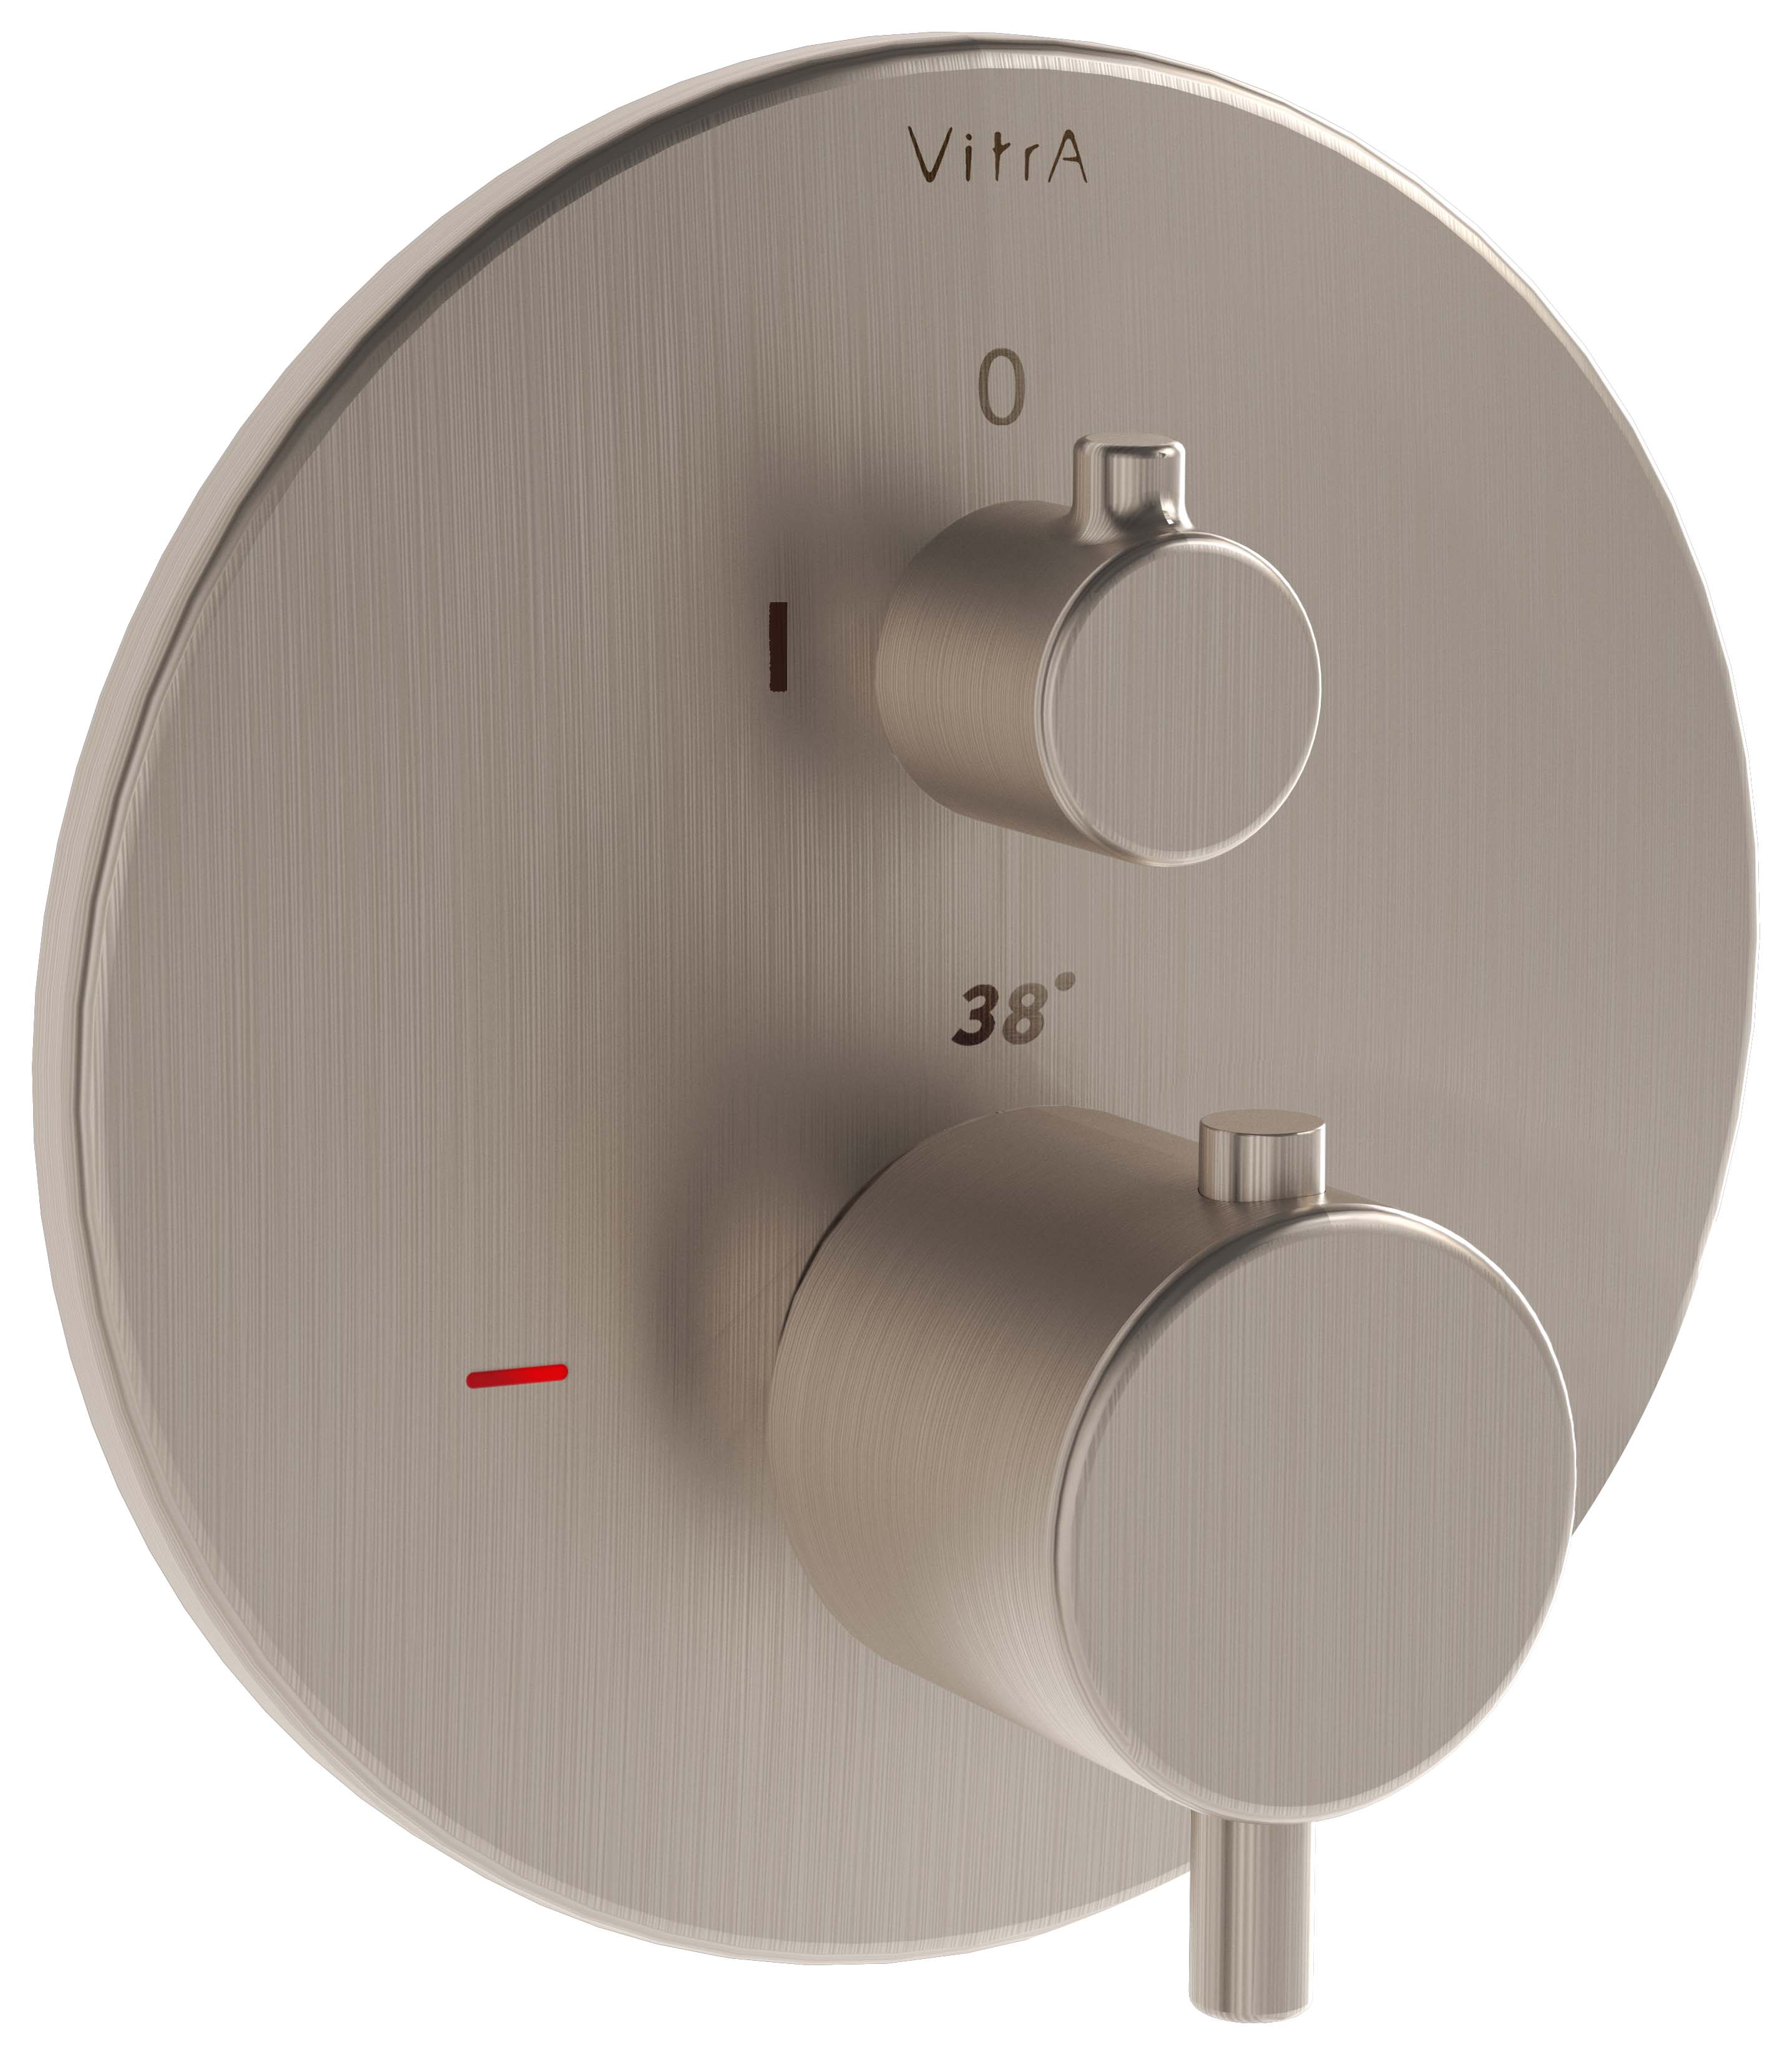 VitrA Origin Round Built-In 1 Way Thermostatic Bath & Shower Mixer Valve - Brushed Nickel